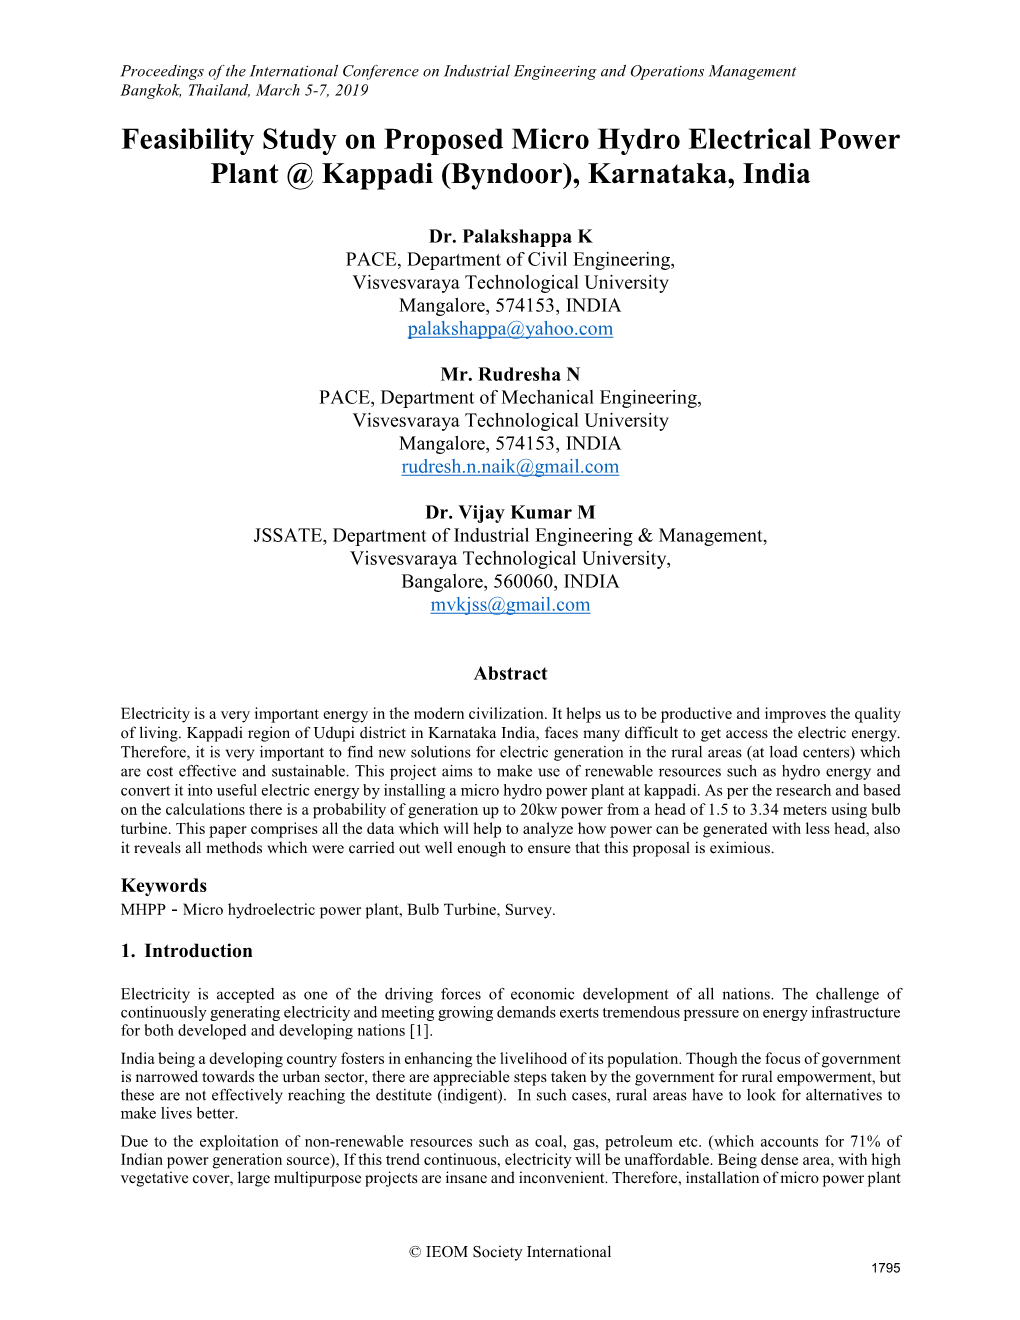 Feasibility Study on Proposed Micro Hydro Electrical Power Plant @ Kappadi (Byndoor), Karnataka, India